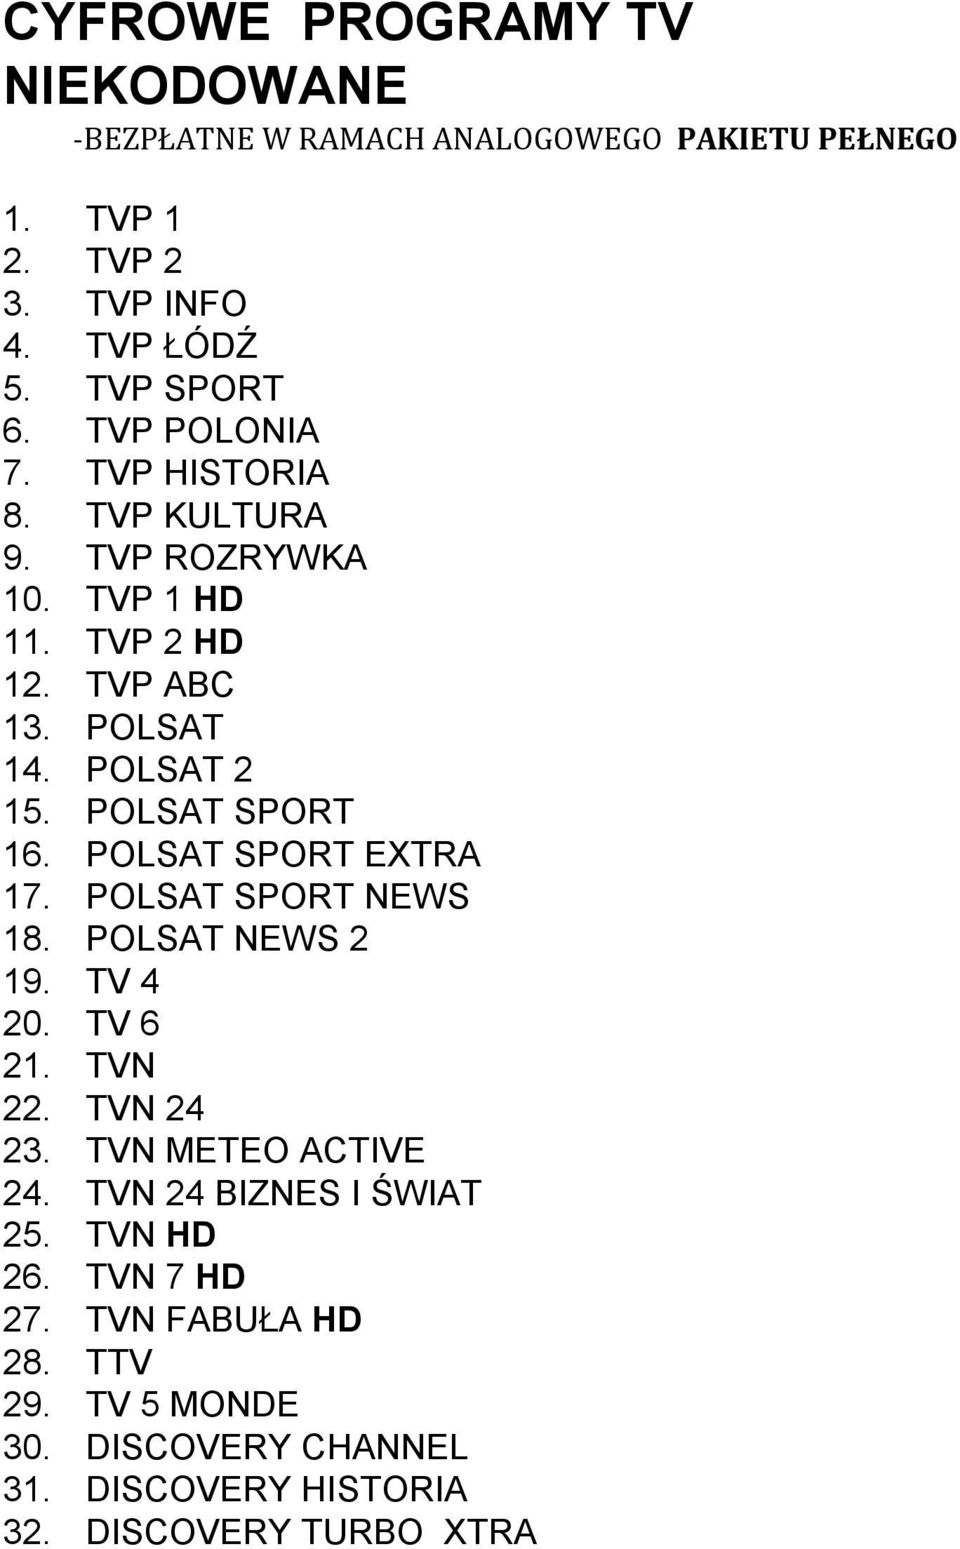 POLSAT SPORT 16. POLSAT SPORT EXTRA 17. POLSAT SPORT NEWS 18. POLSAT NEWS 2 19. TV 4 20. TV 6 21. TVN 22. TVN 24 23. TVN METEO ACTIVE 24.